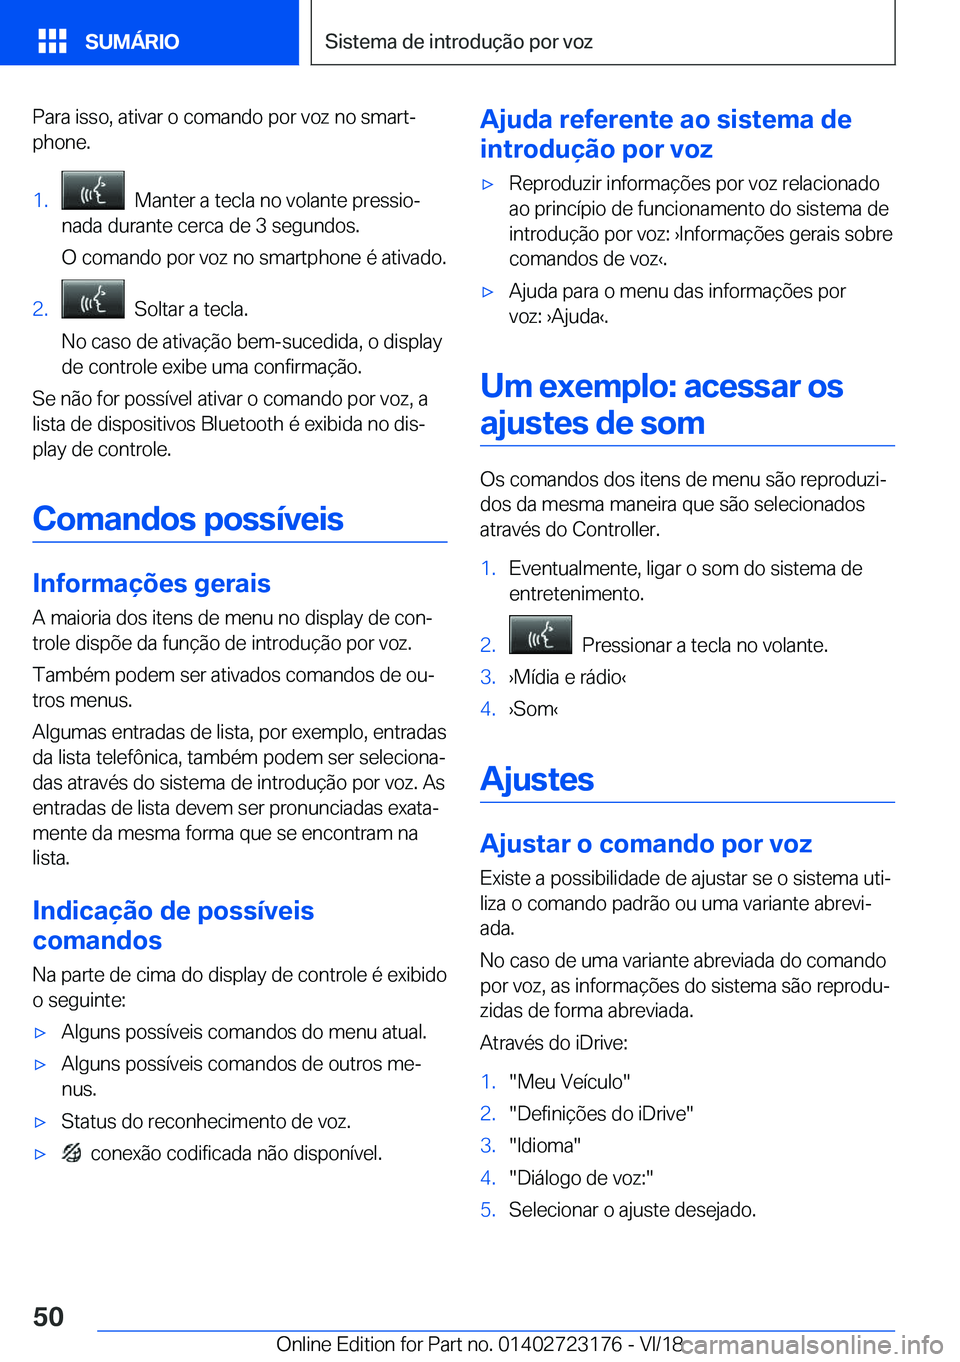 BMW 4 SERIES GRAN COUPE 2019  Manual do condutor (in Portuguese) �P�a�r�a��i�s�s�o�,��a�t�i�v�a�r��o��c�o�m�a�n�d�o��p�o�r��v�o�z��n�o��s�m�a�r�tª�p�h�o�n�e�.�1�.���M�a�n�t�e�r��a��t�e�c�l�a��n�o��v�o�l�a�n�t�e��p�r�e�s�s�i�oª
�n�a�d�a��d�u�r�a�